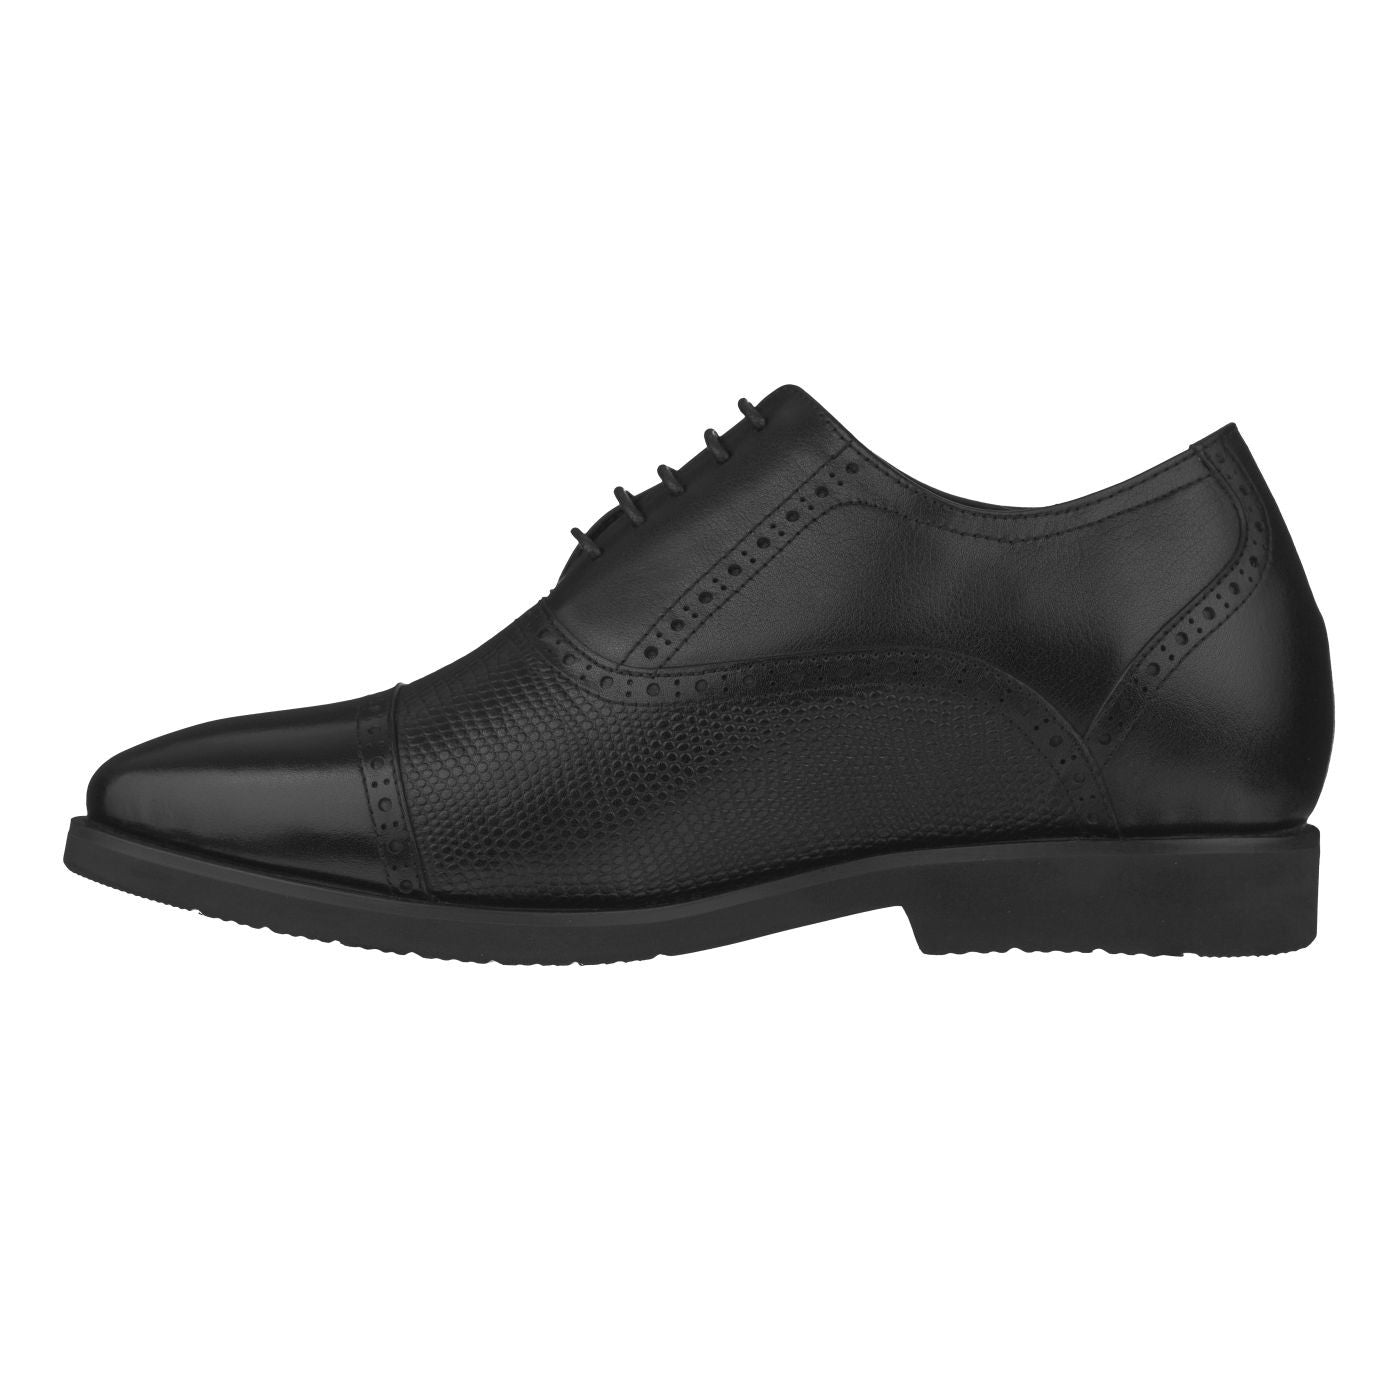 Elevator shoes height increase CALDEN - K320021 - 2.8 Inches Taller (Black) - Lightweight